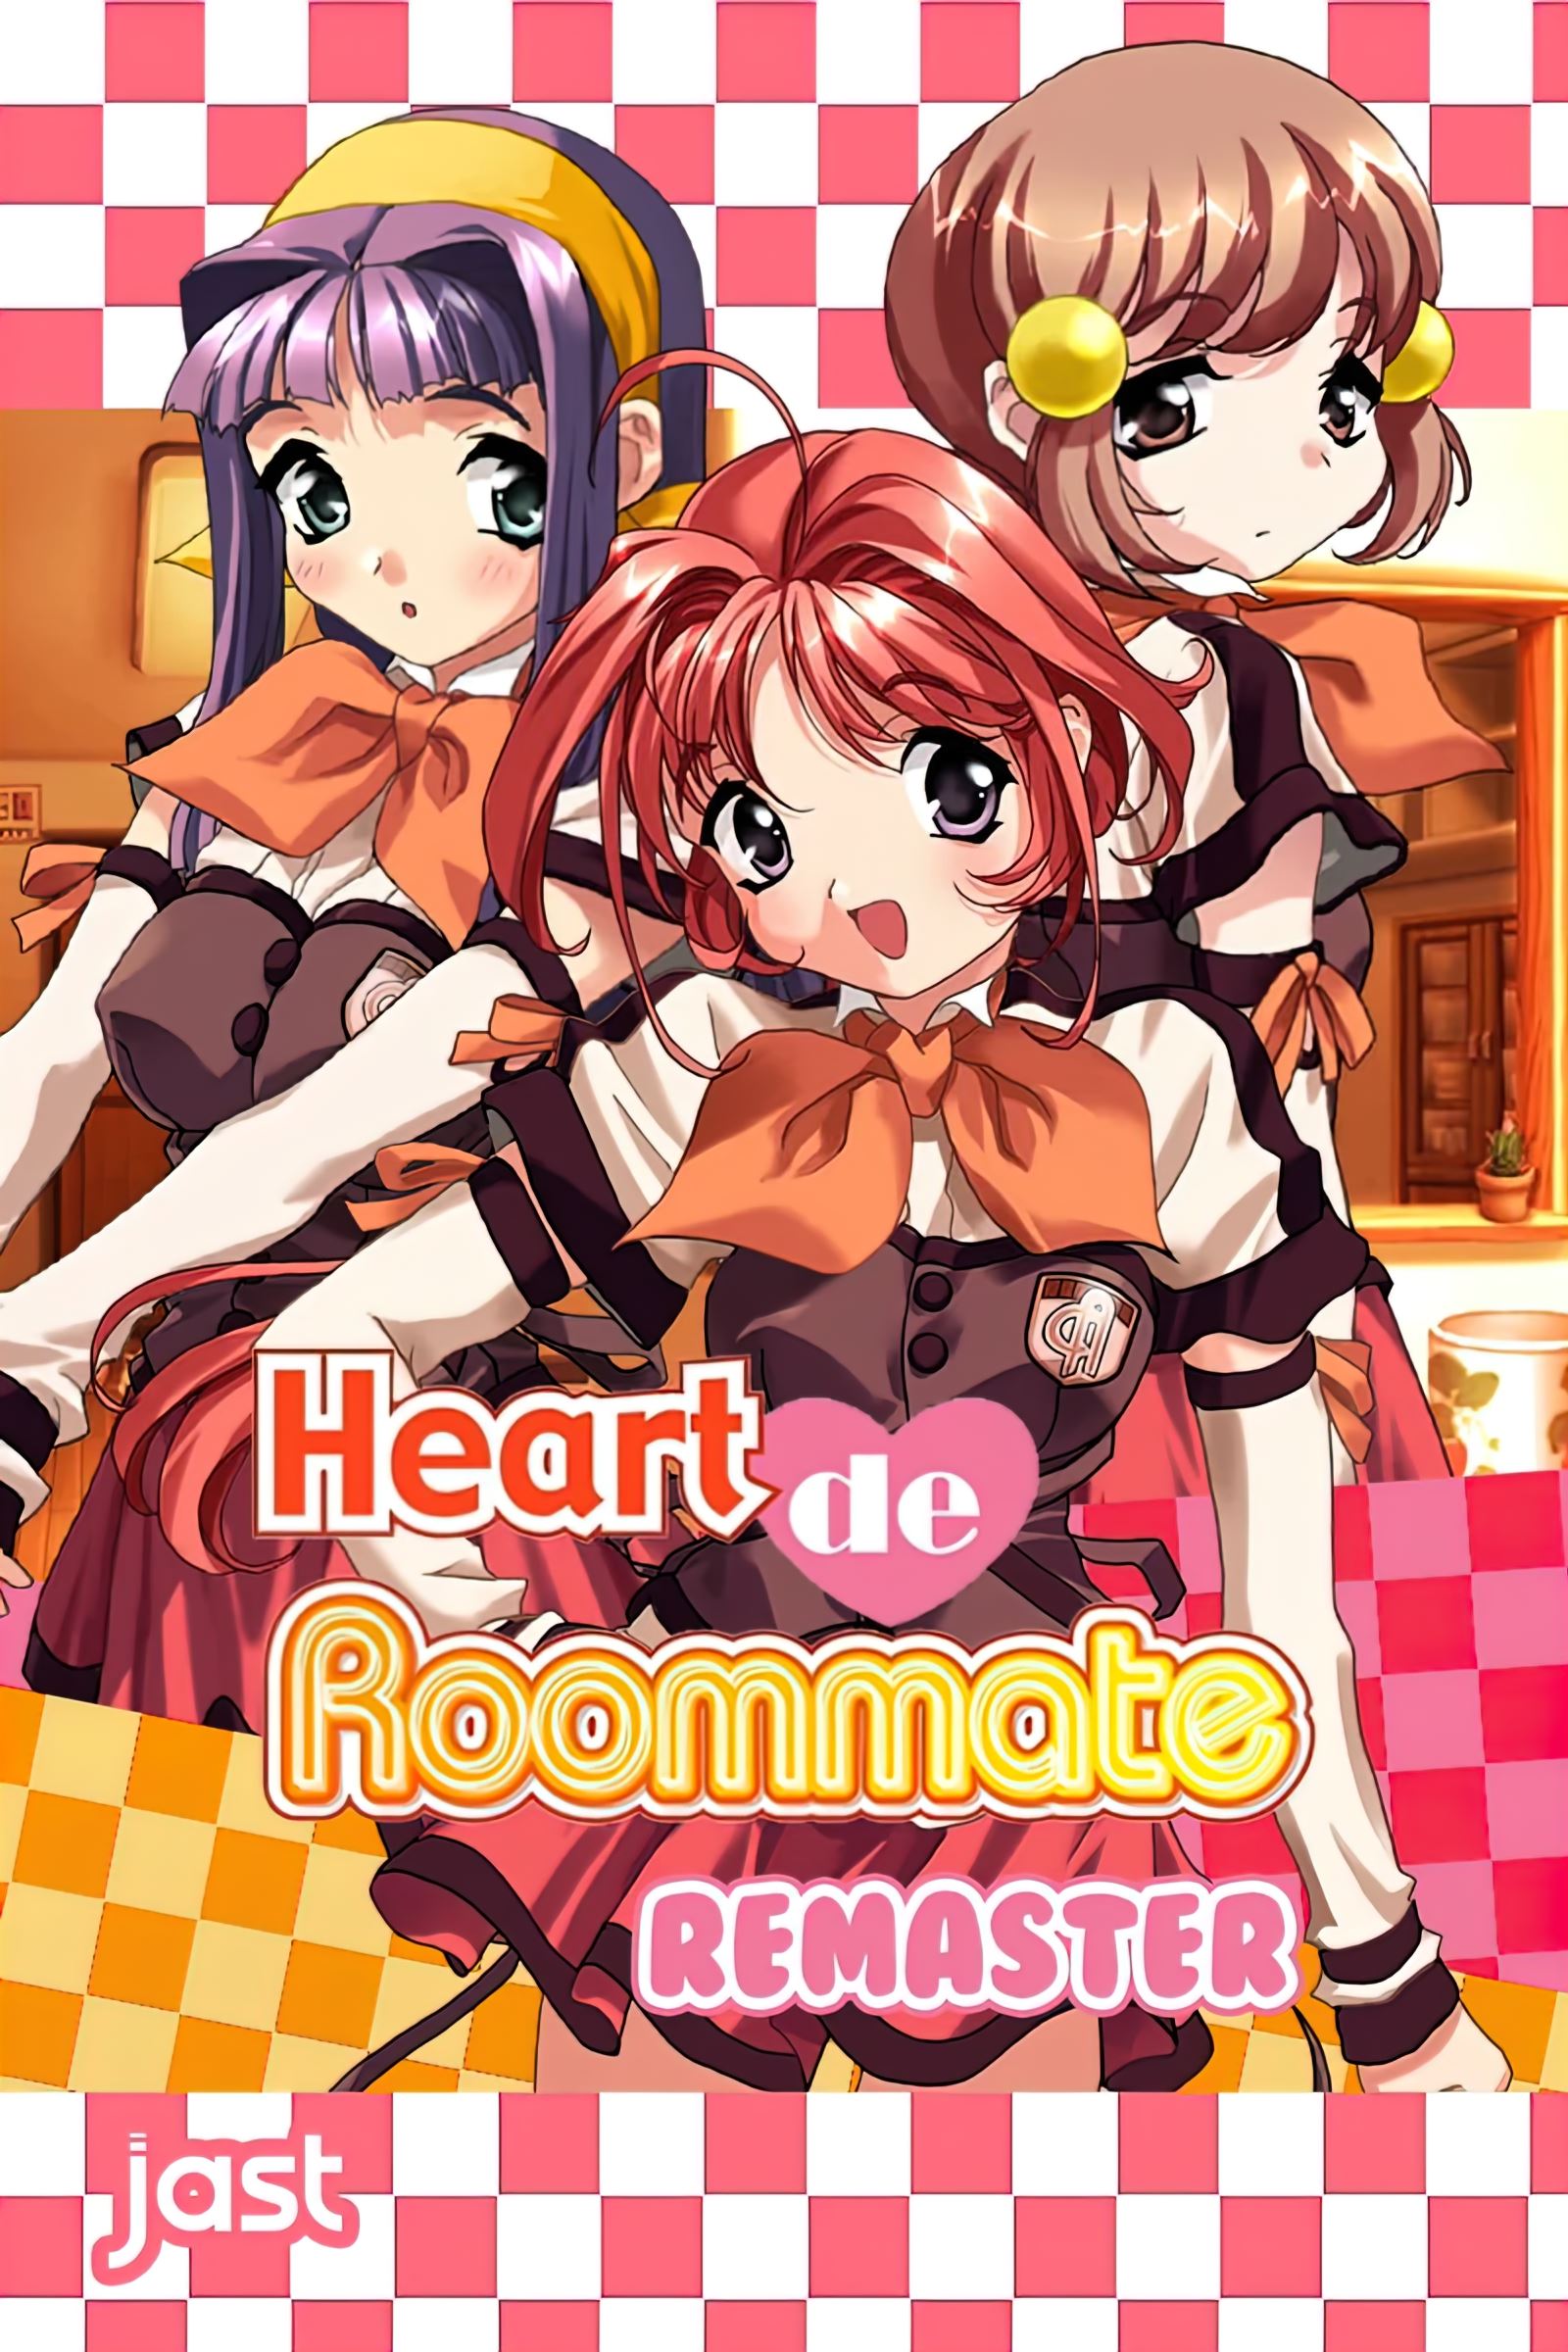 Heart de Roommate Remaster porn xxx game download cover